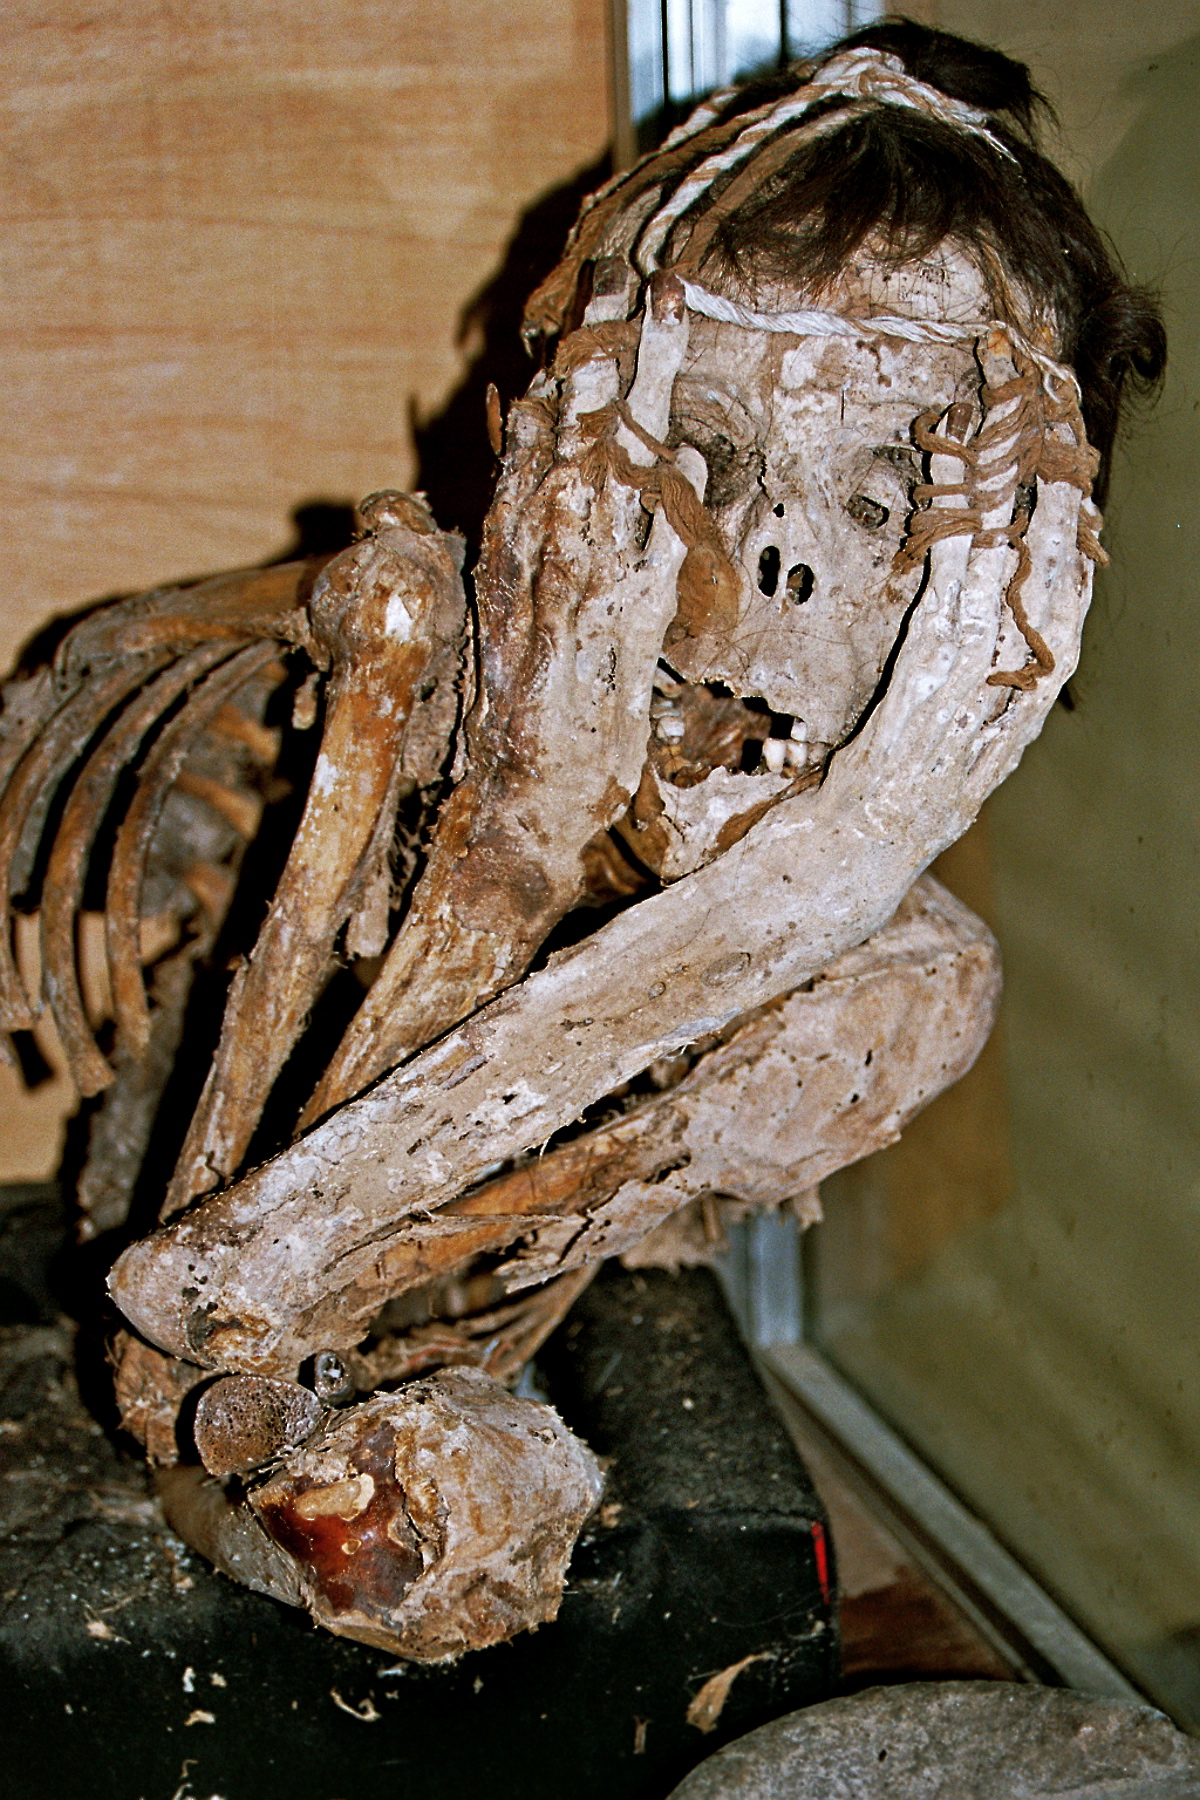 Chachapoya mummy found in Uchucmarca area